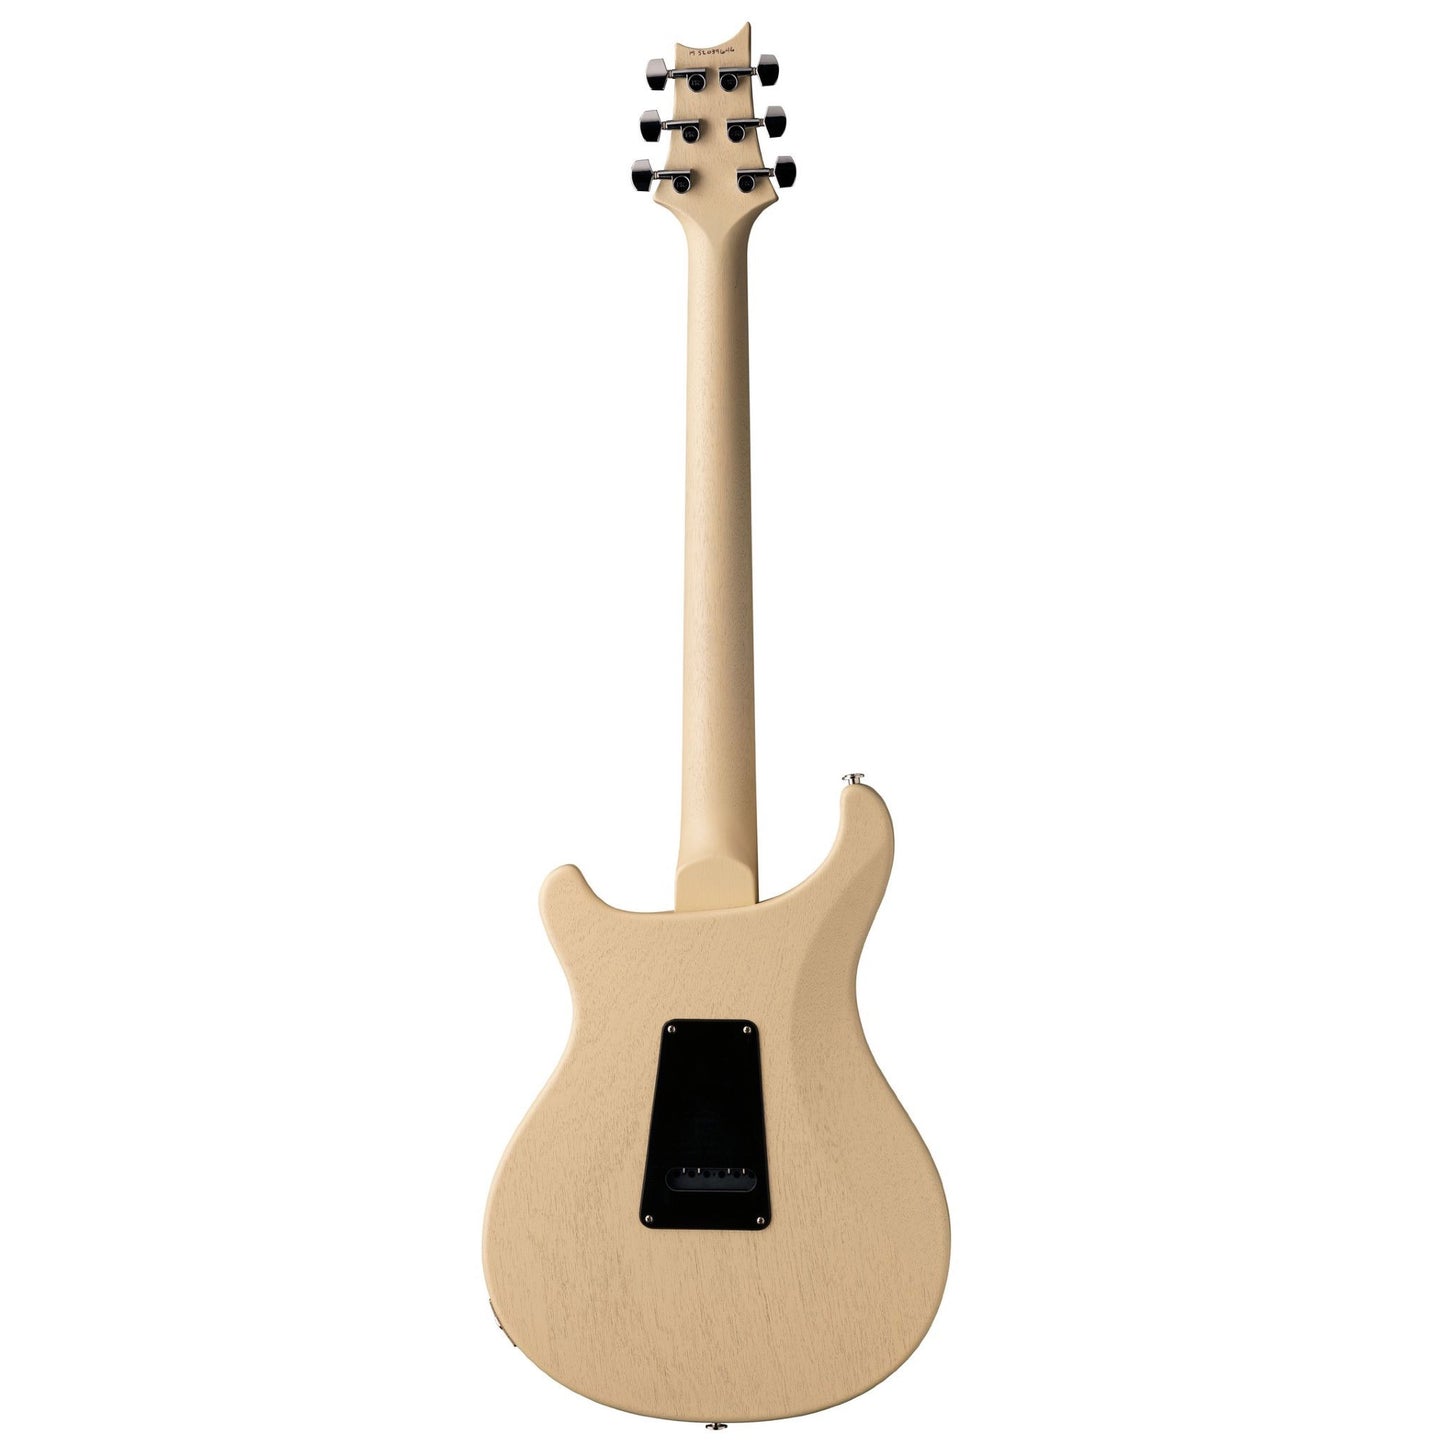 PRS Satin S2 Standard 22 Electric Guitar 2021 - Antique White Satin